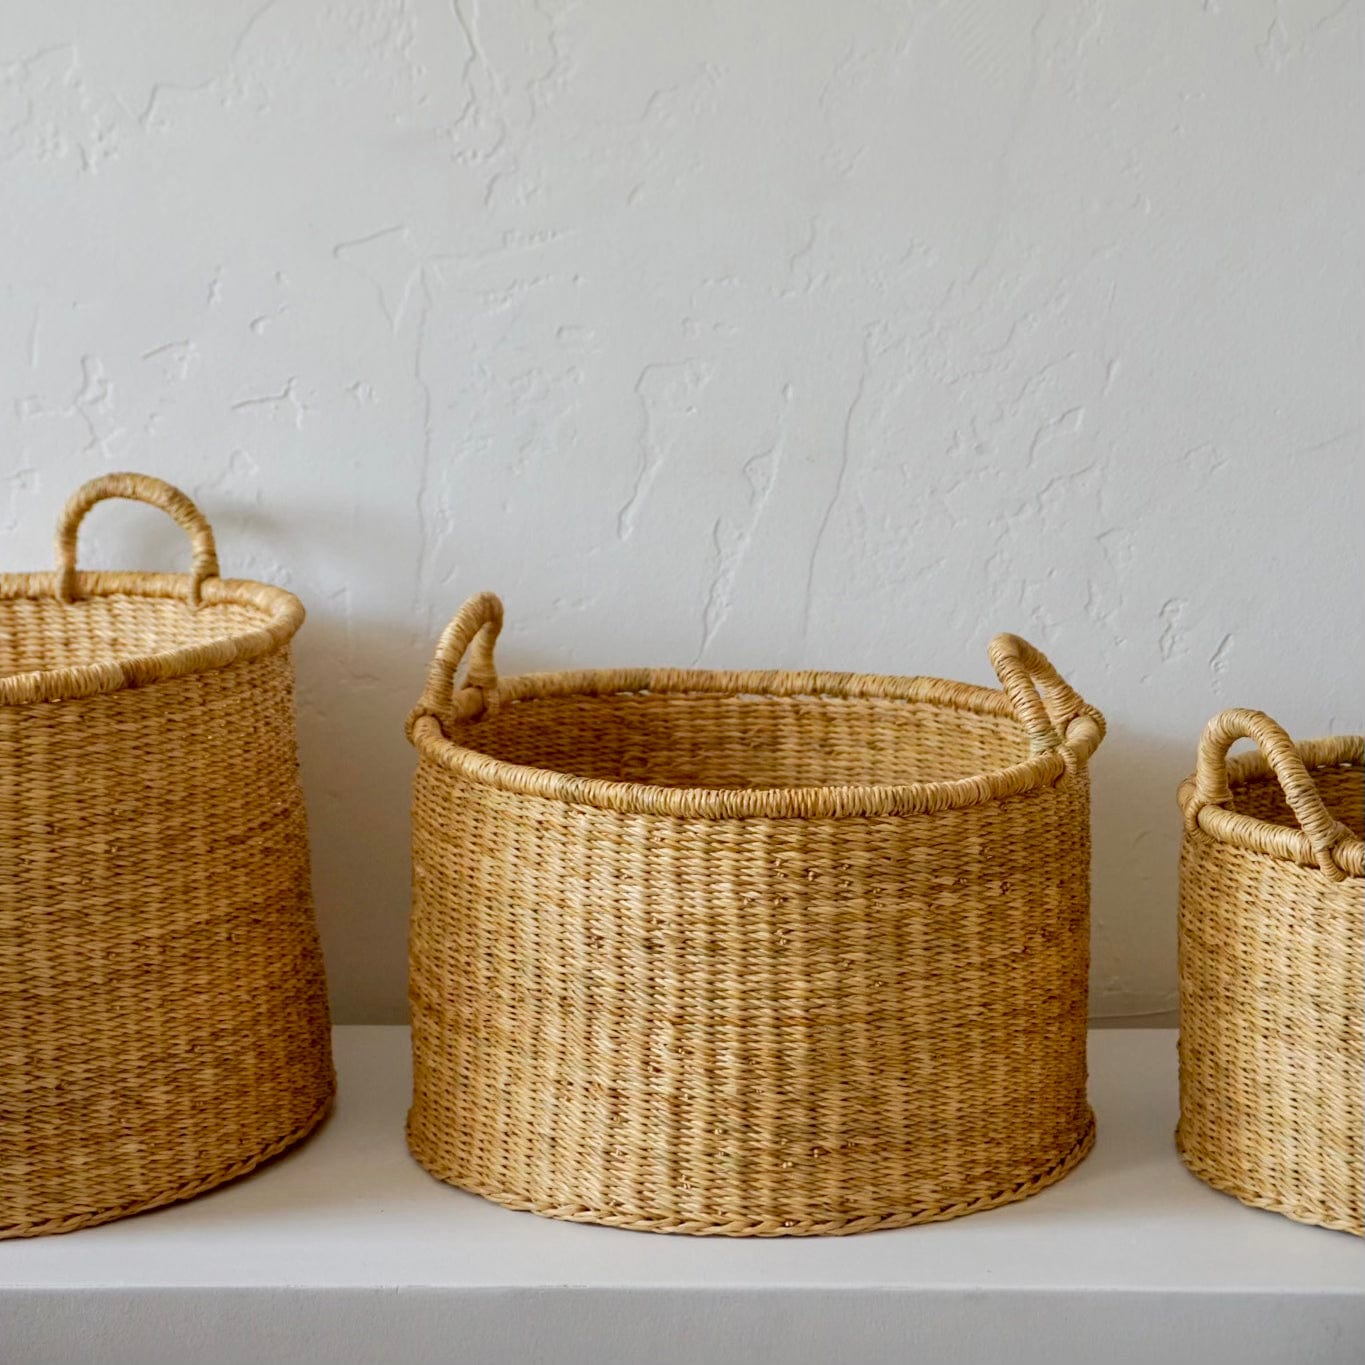 Large Flat Baskets